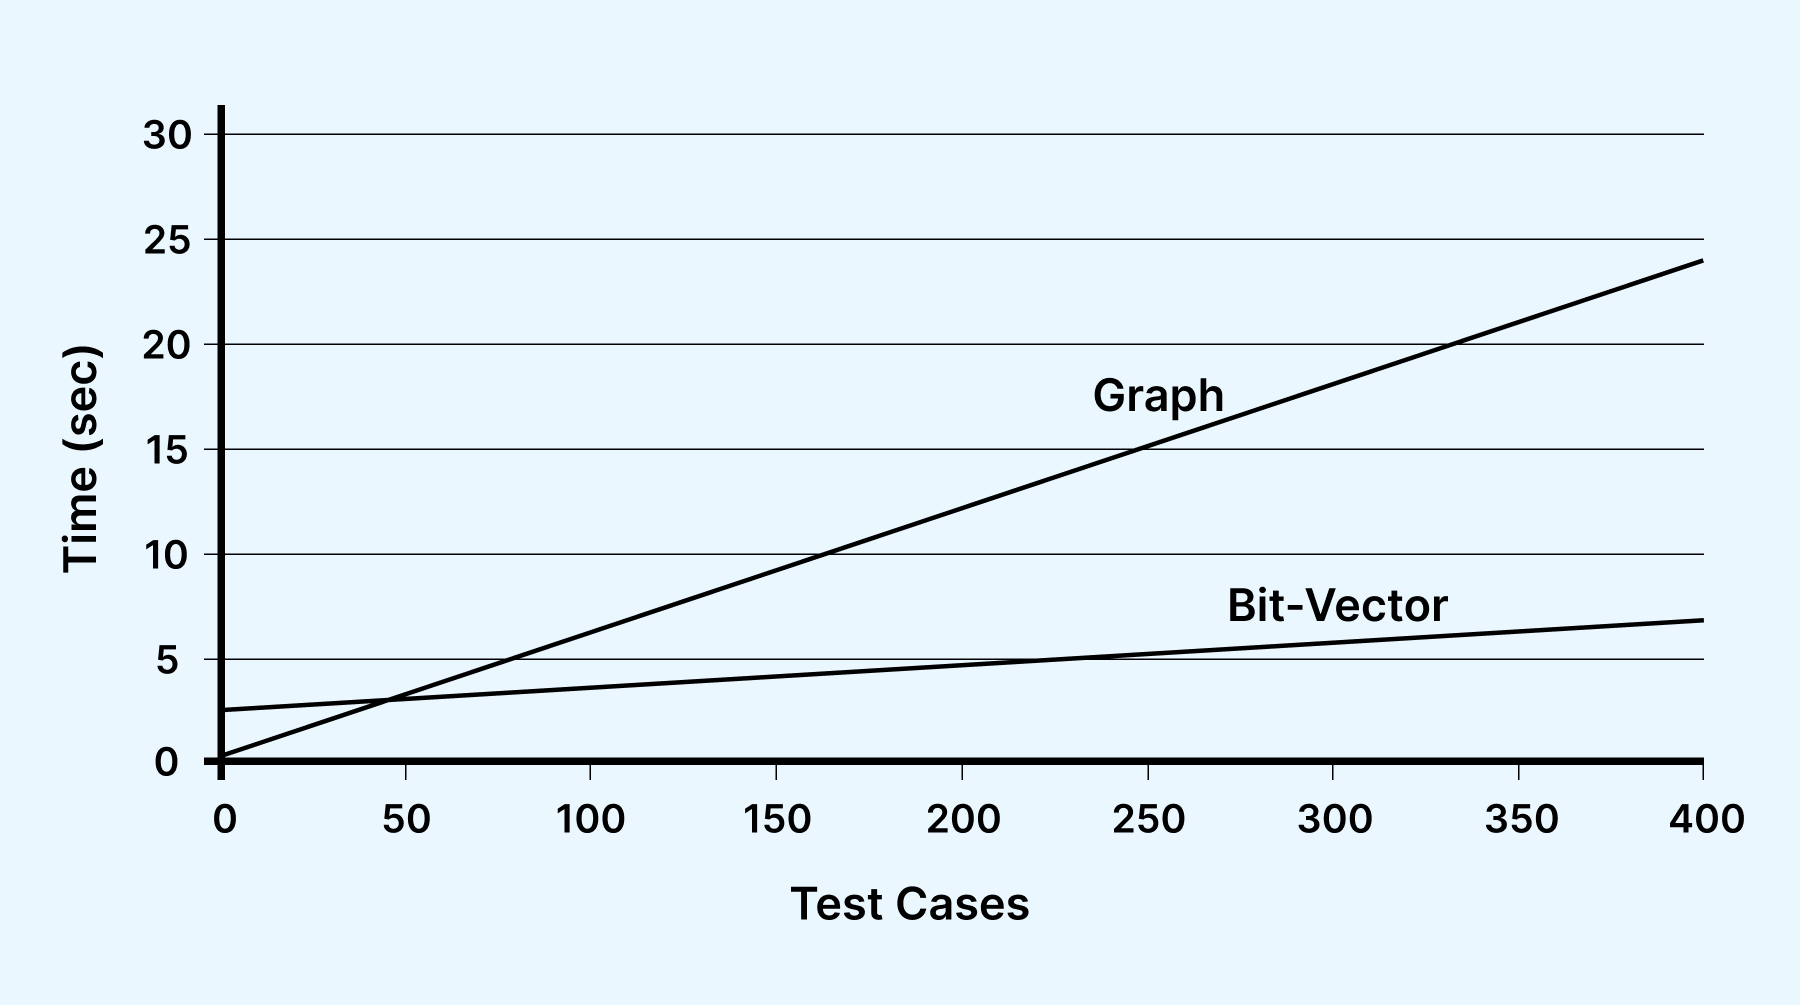  image emphasizes the feasibility of maintaining test